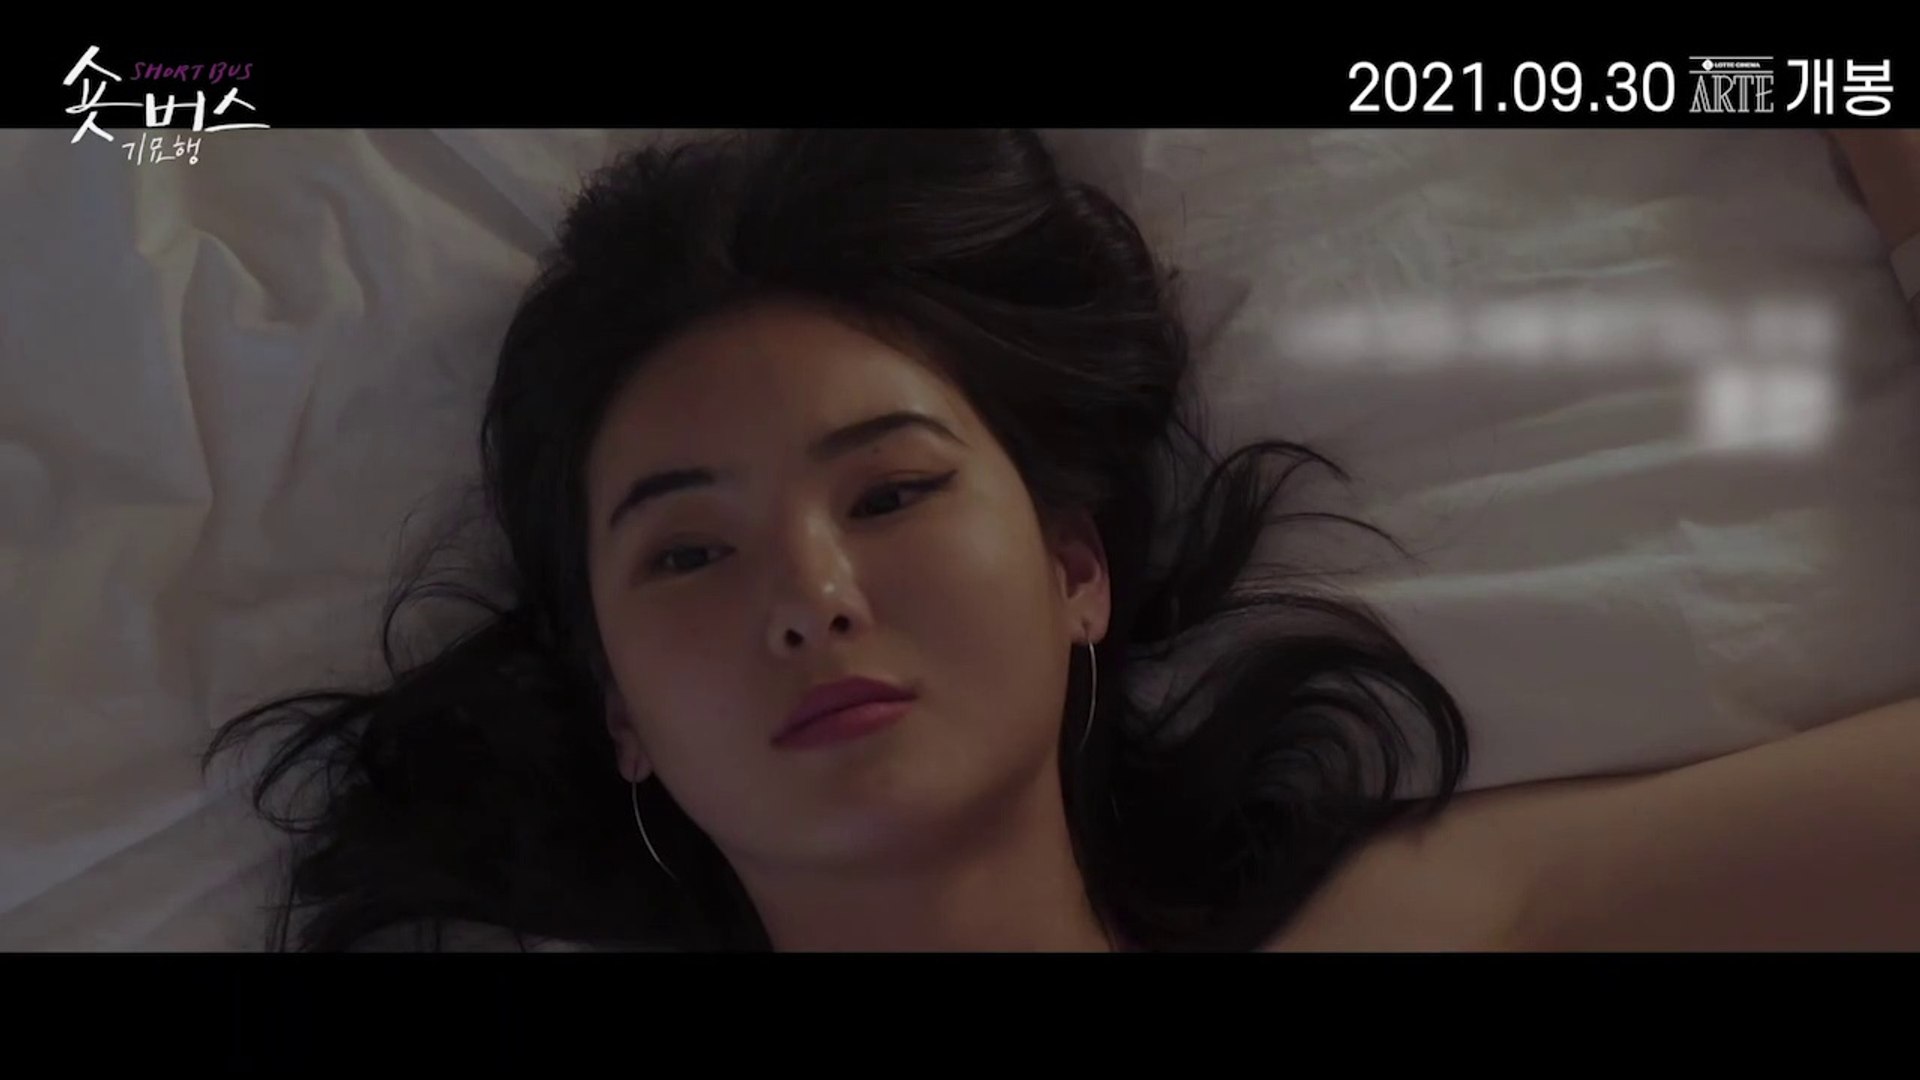 CHAMPION (2018) Trailer VOST-ENG - KOREAN - Vidéo Dailymotion